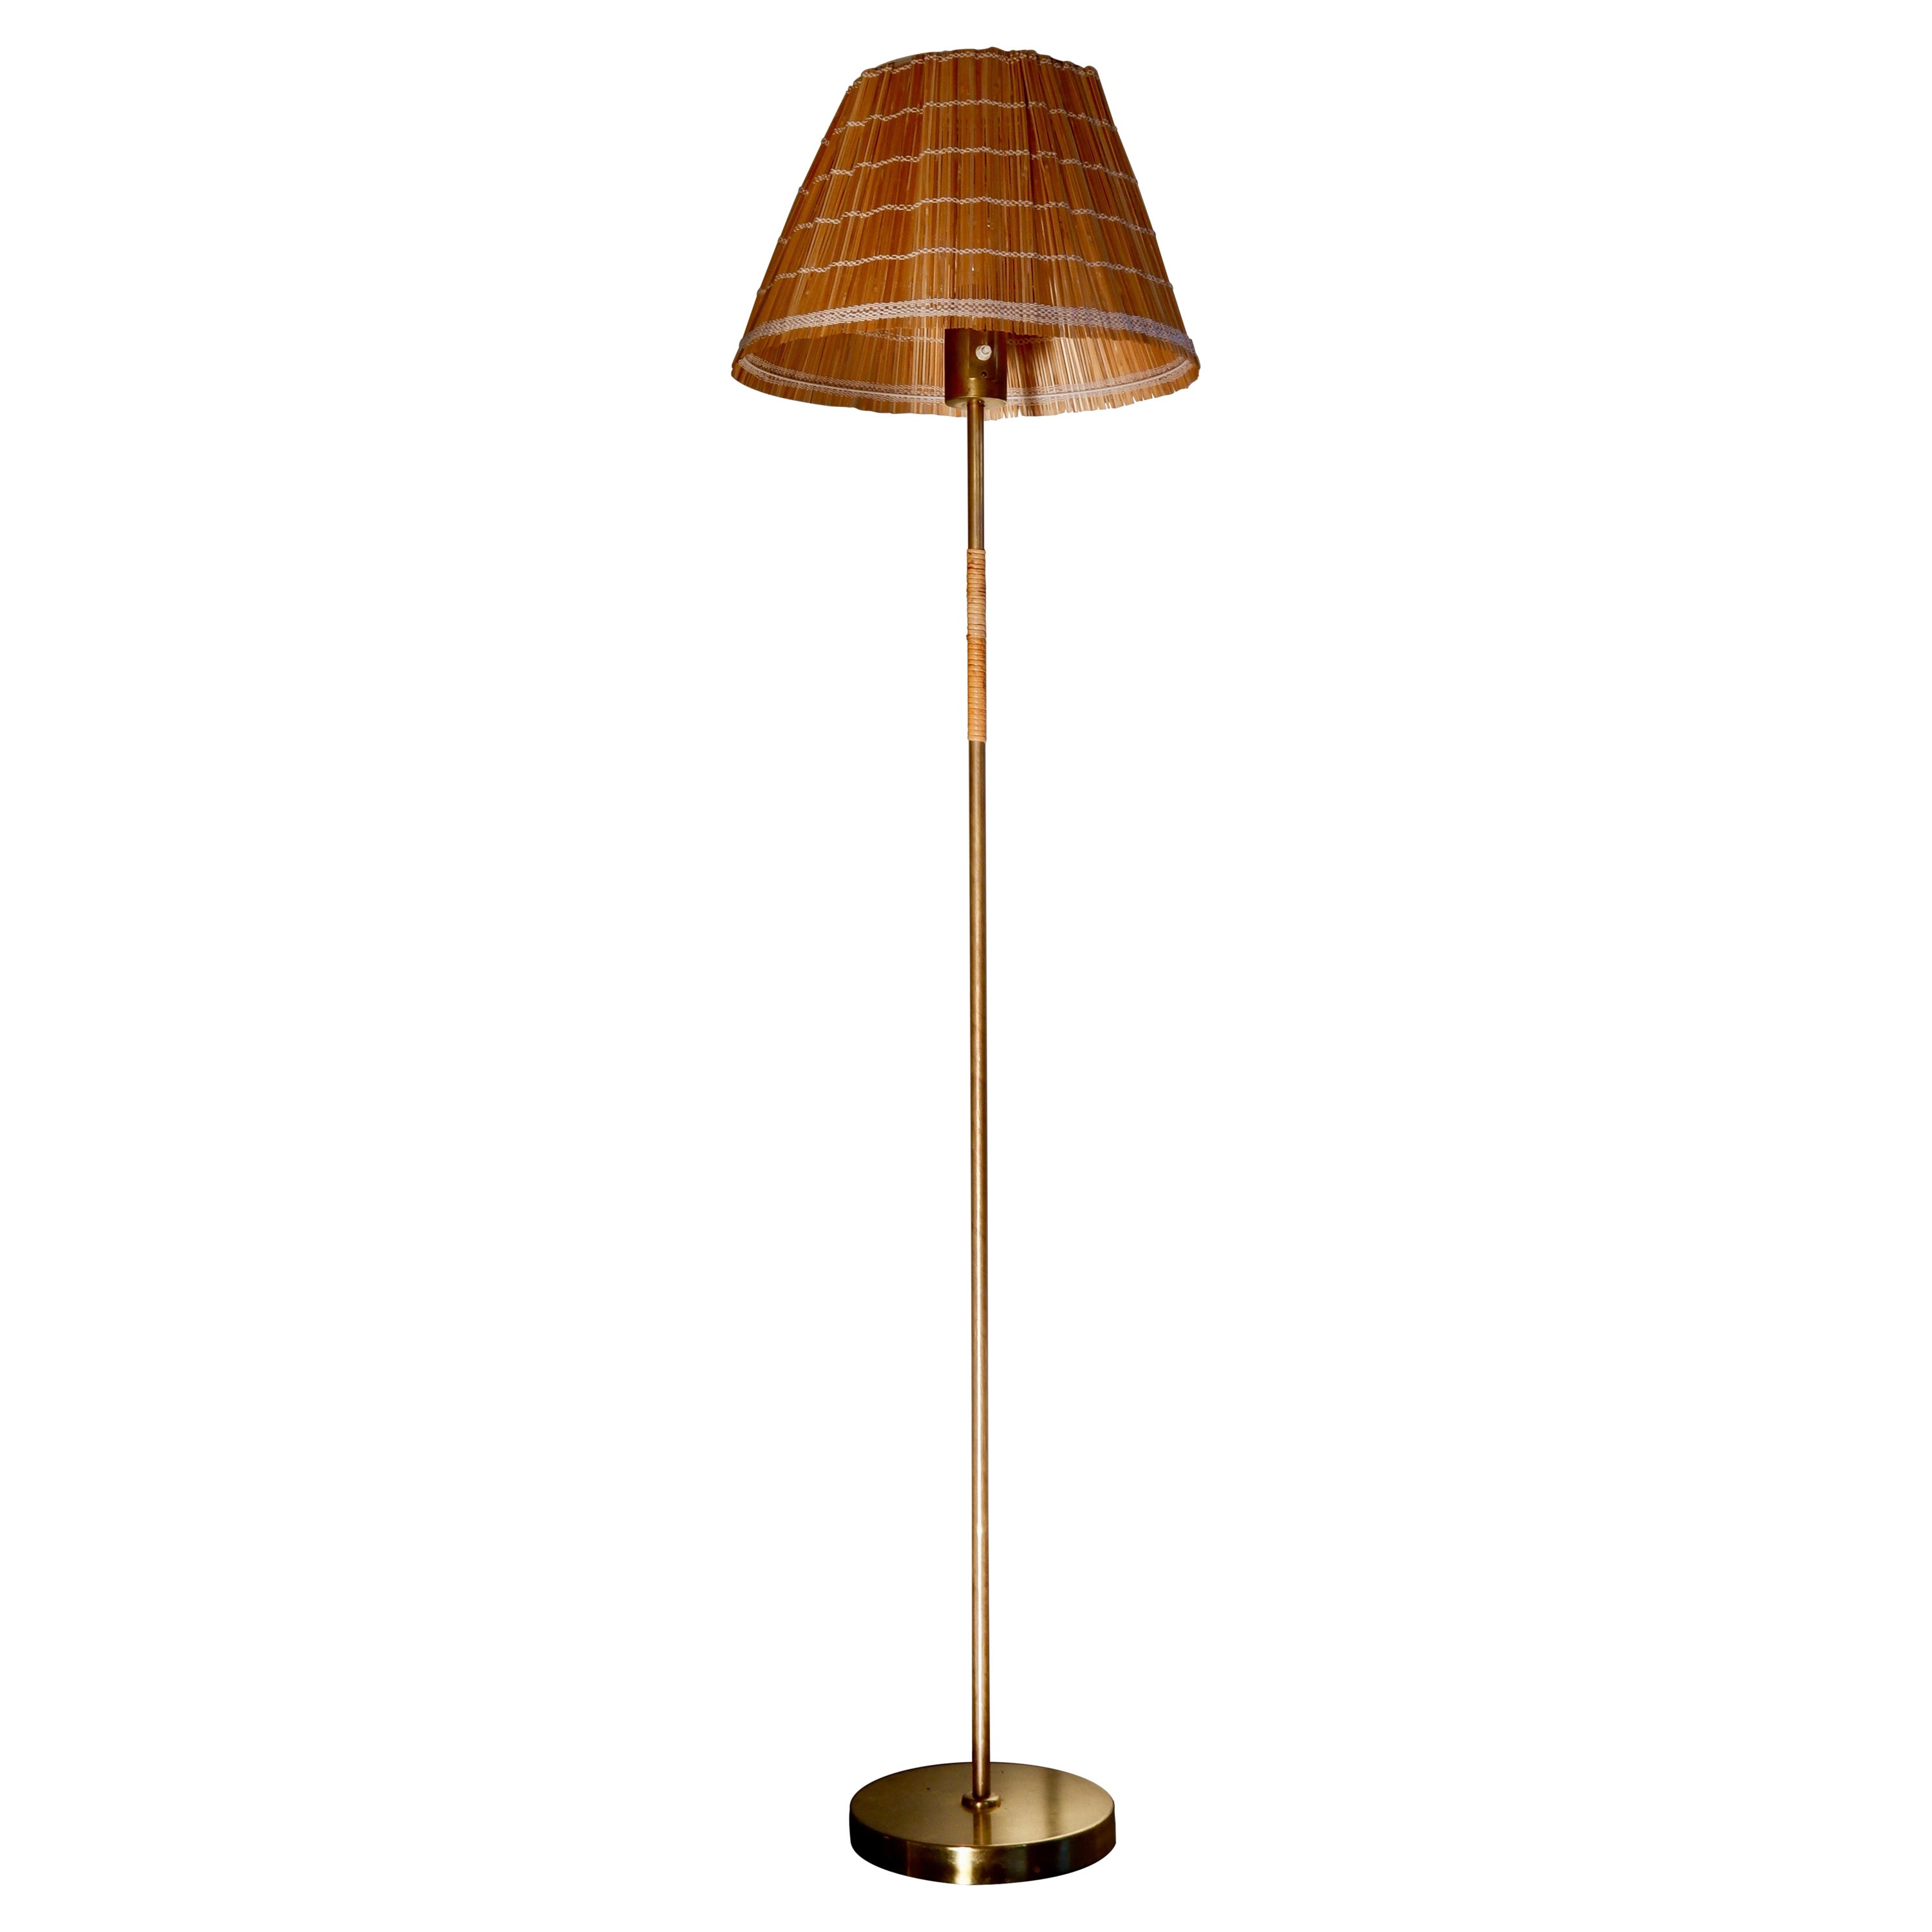 Paavo Tynell Floor Lamp Model K10-13 for Idman circa 1950, Woodstraw Shade